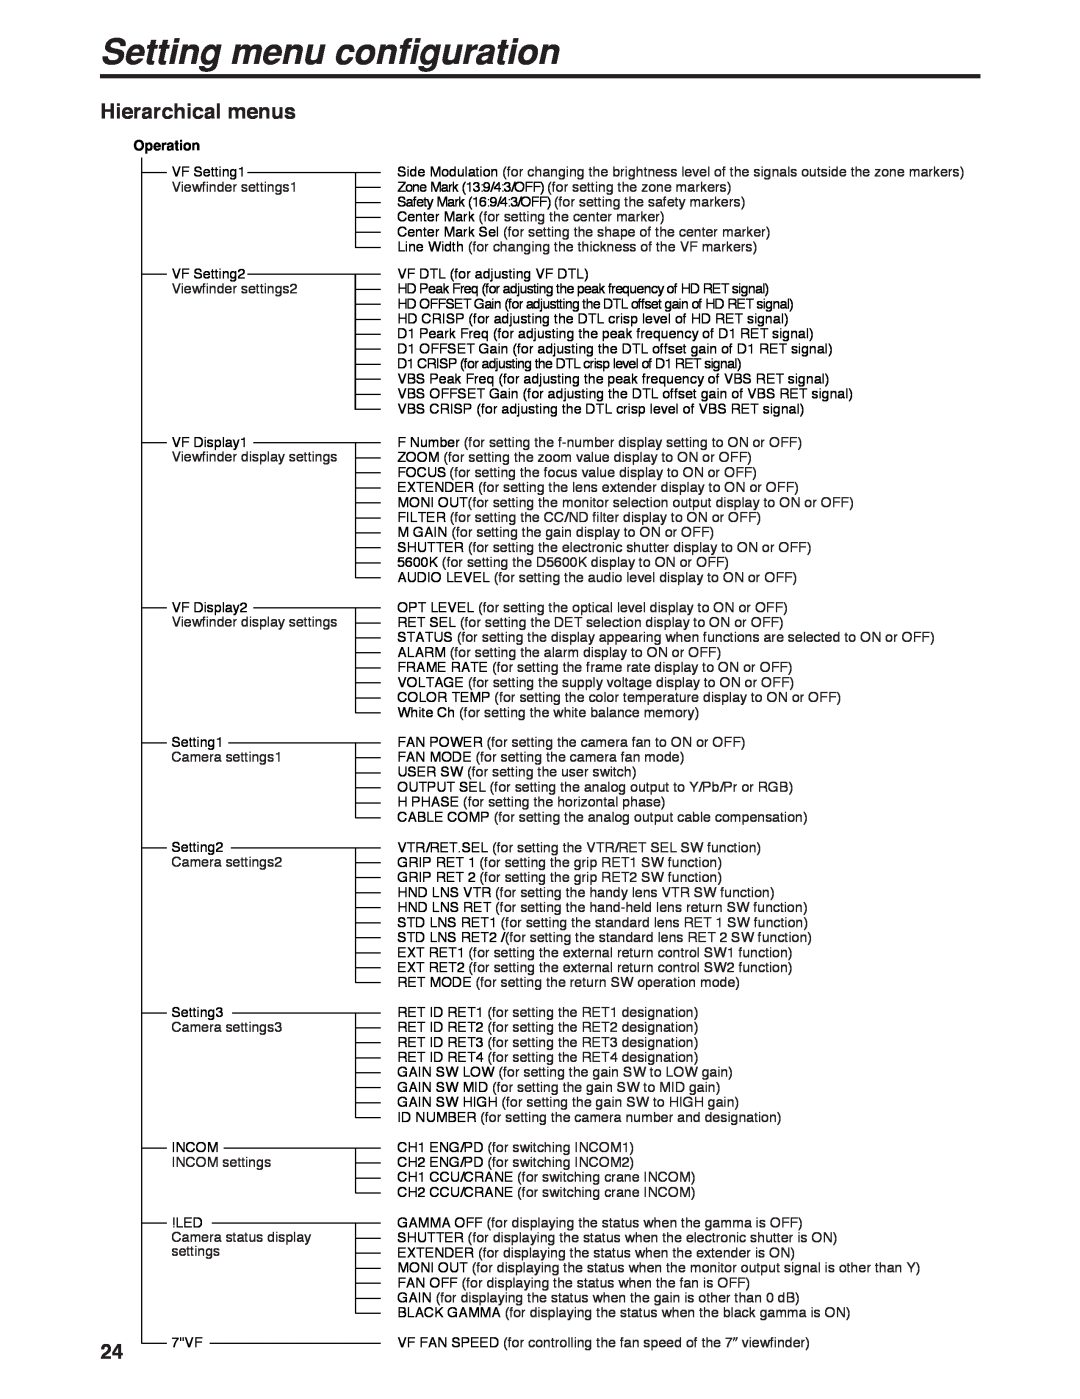 Panasonic AK-HC931B manual Setting menu configuration, Hierarchical menus, Operation 